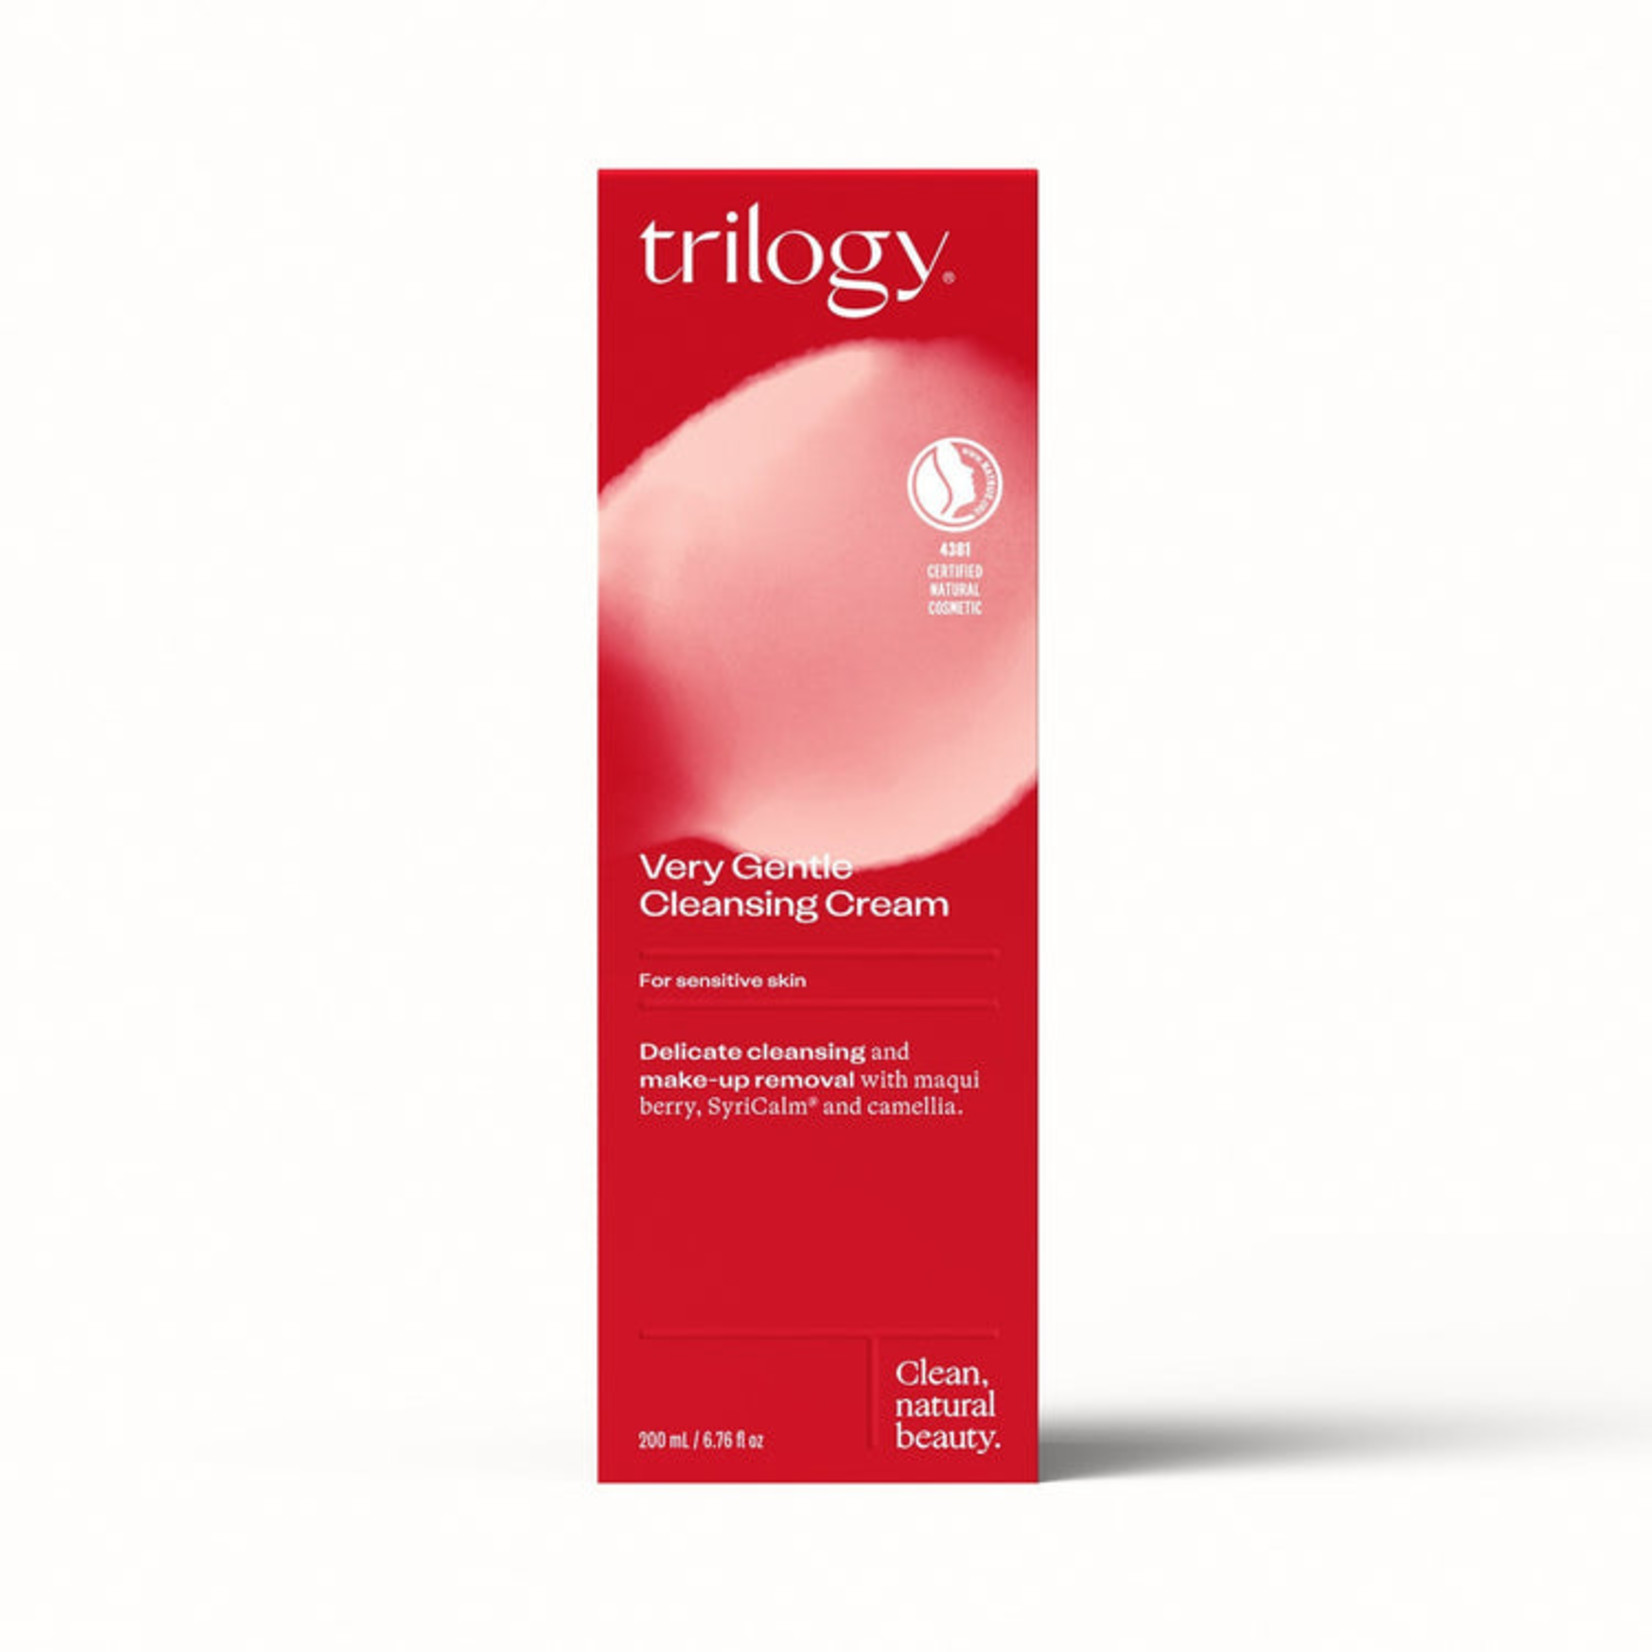 Trilogy Trilogy - Gentle Cleansing Cream - 6.8 oz